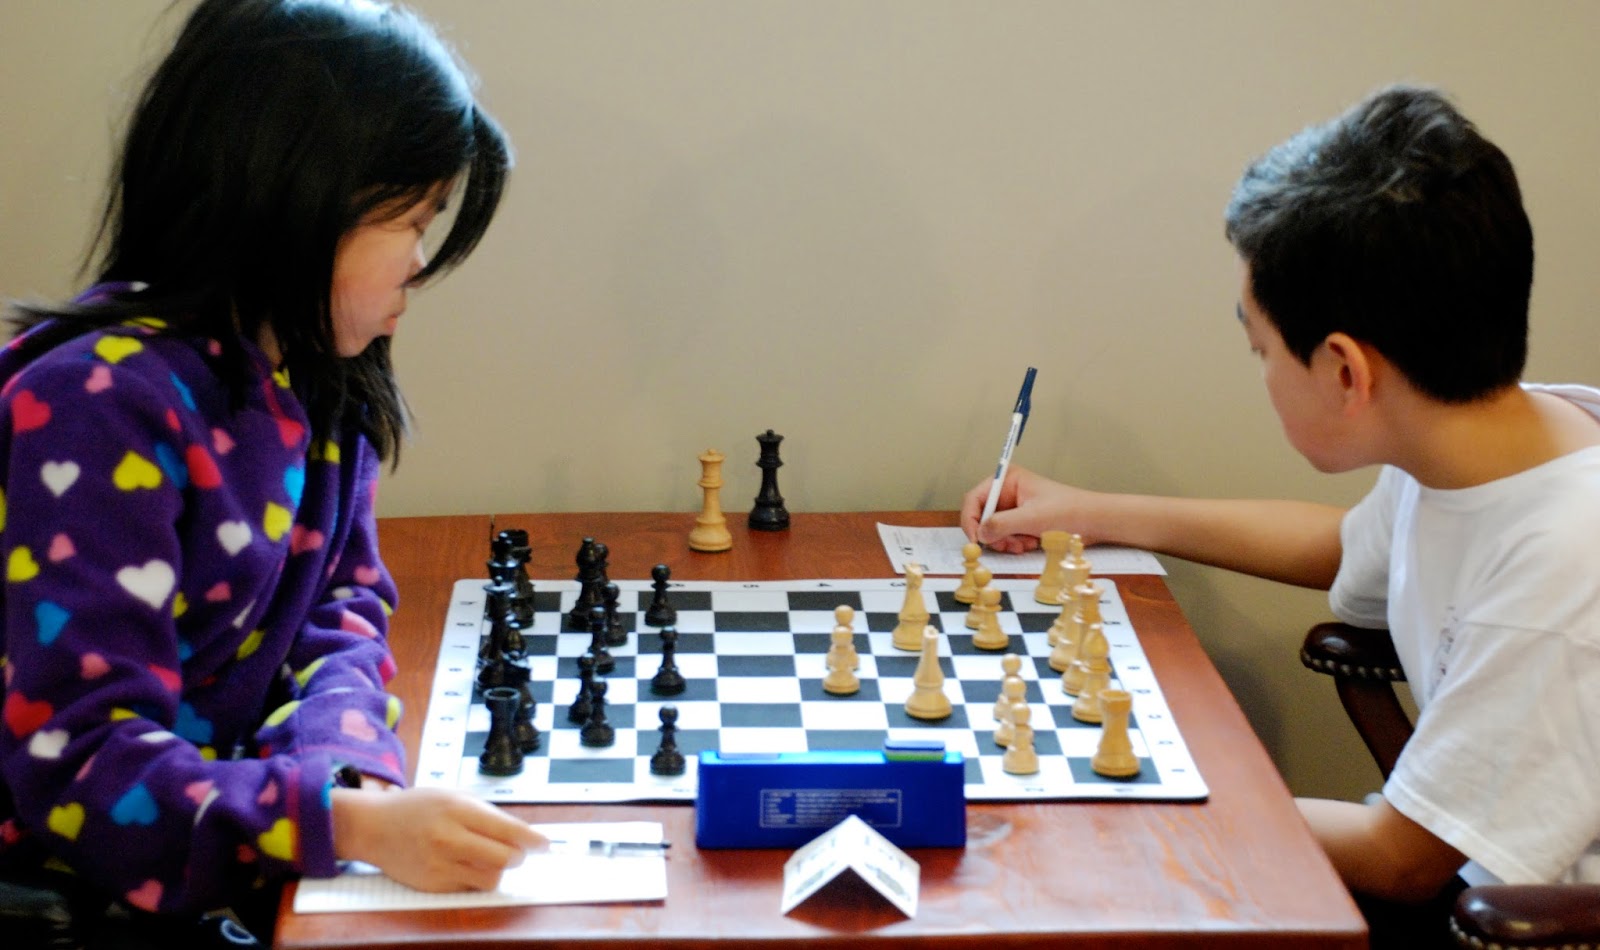 Boylston Chess Club Weblog: Carissa Yip - highest FIDE rating in